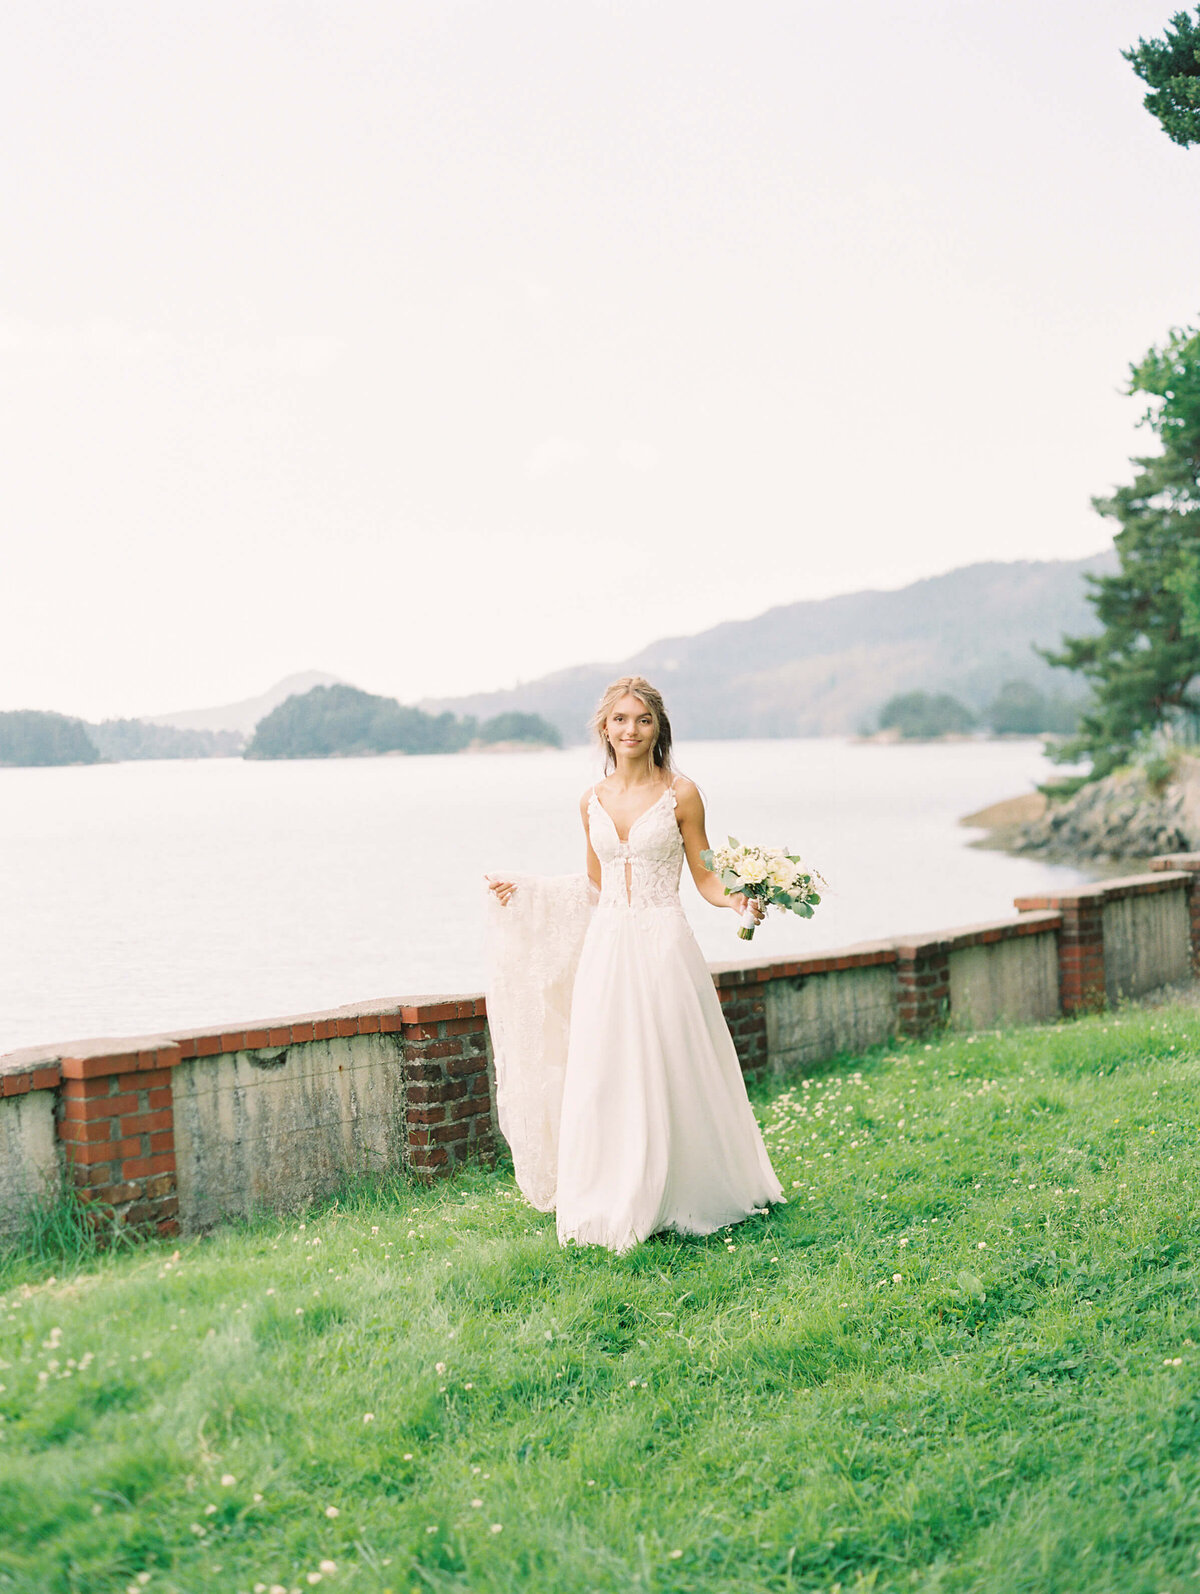 Lisa-Leanne-Photography_Bergen-Norway-Wedding_International-Wedding-Photographer_Destination-Wedding-Photographer_27